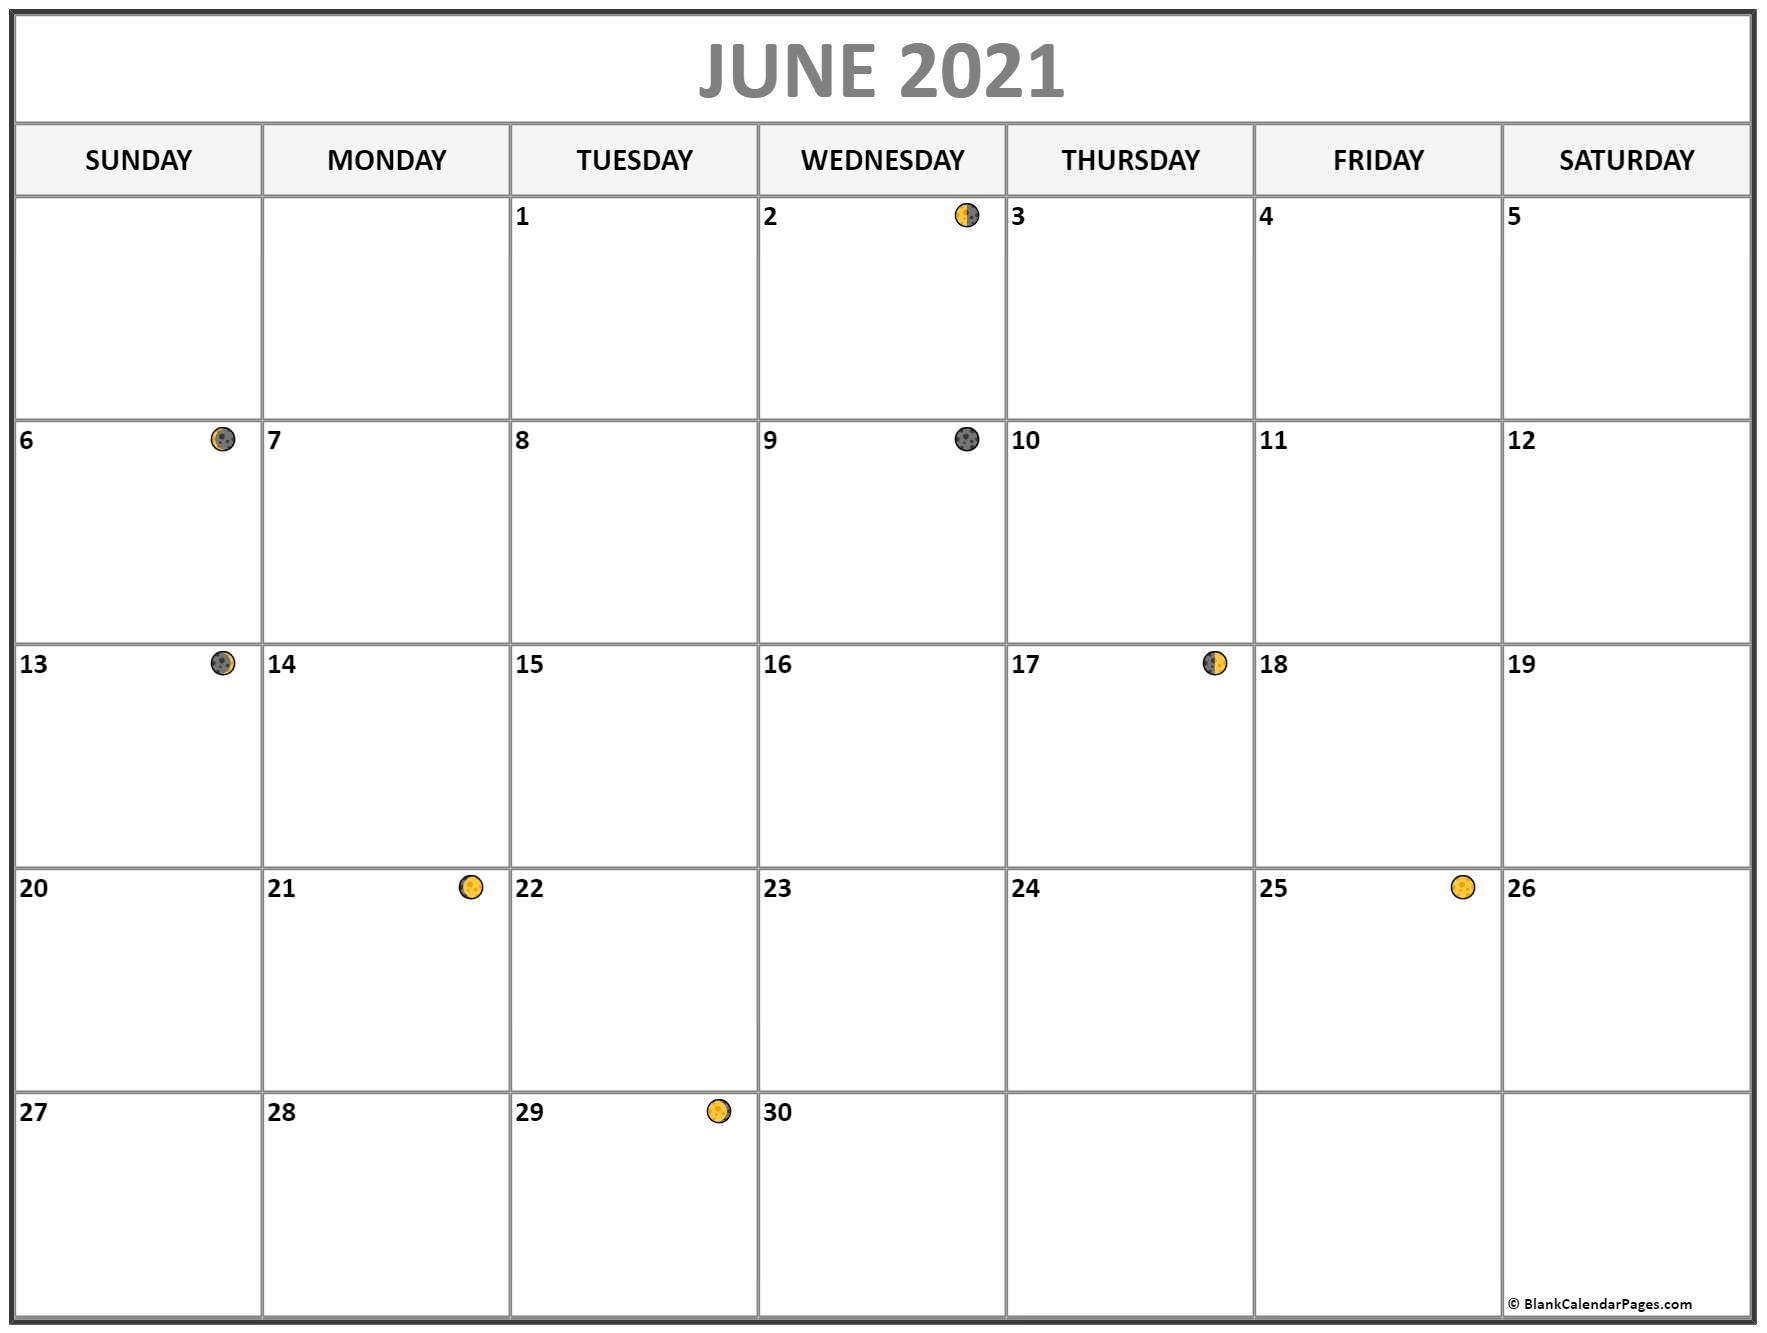 June 2021 Lunar Calendar | Moon Phase Calendar